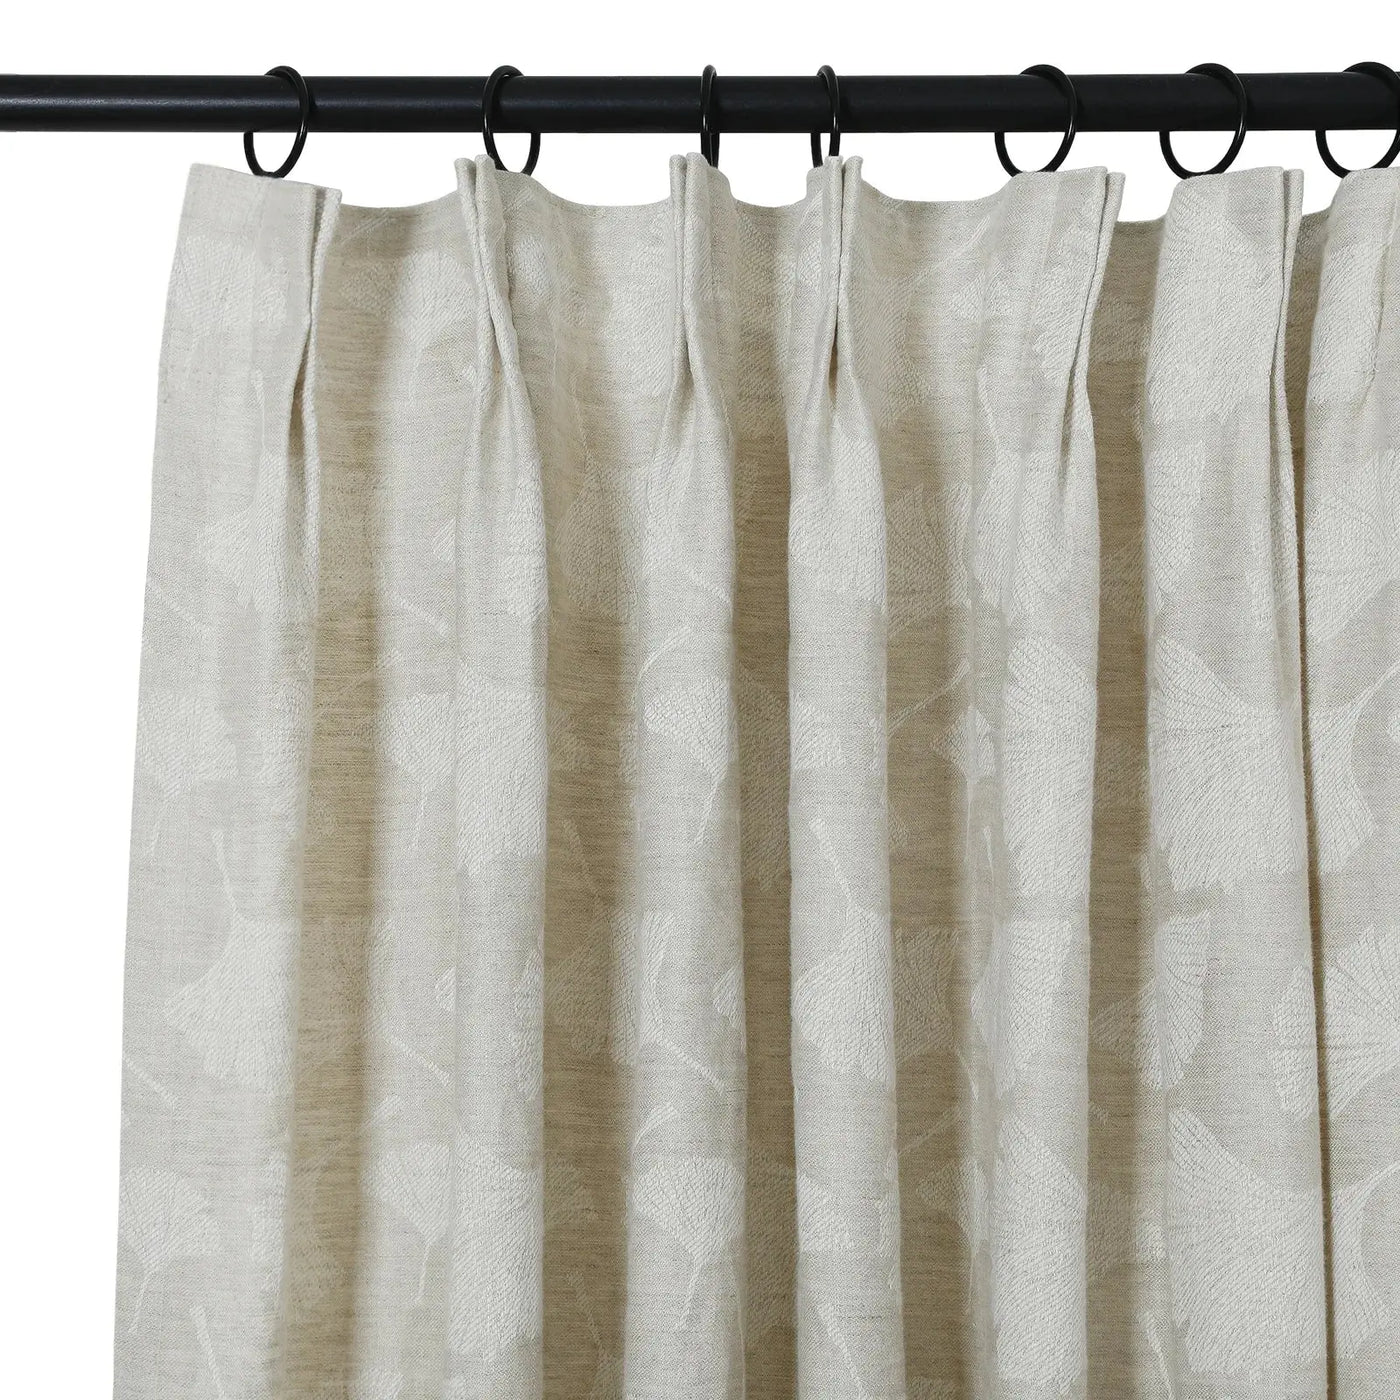 Lance 100% Linen Jacquard Curtain Pleated